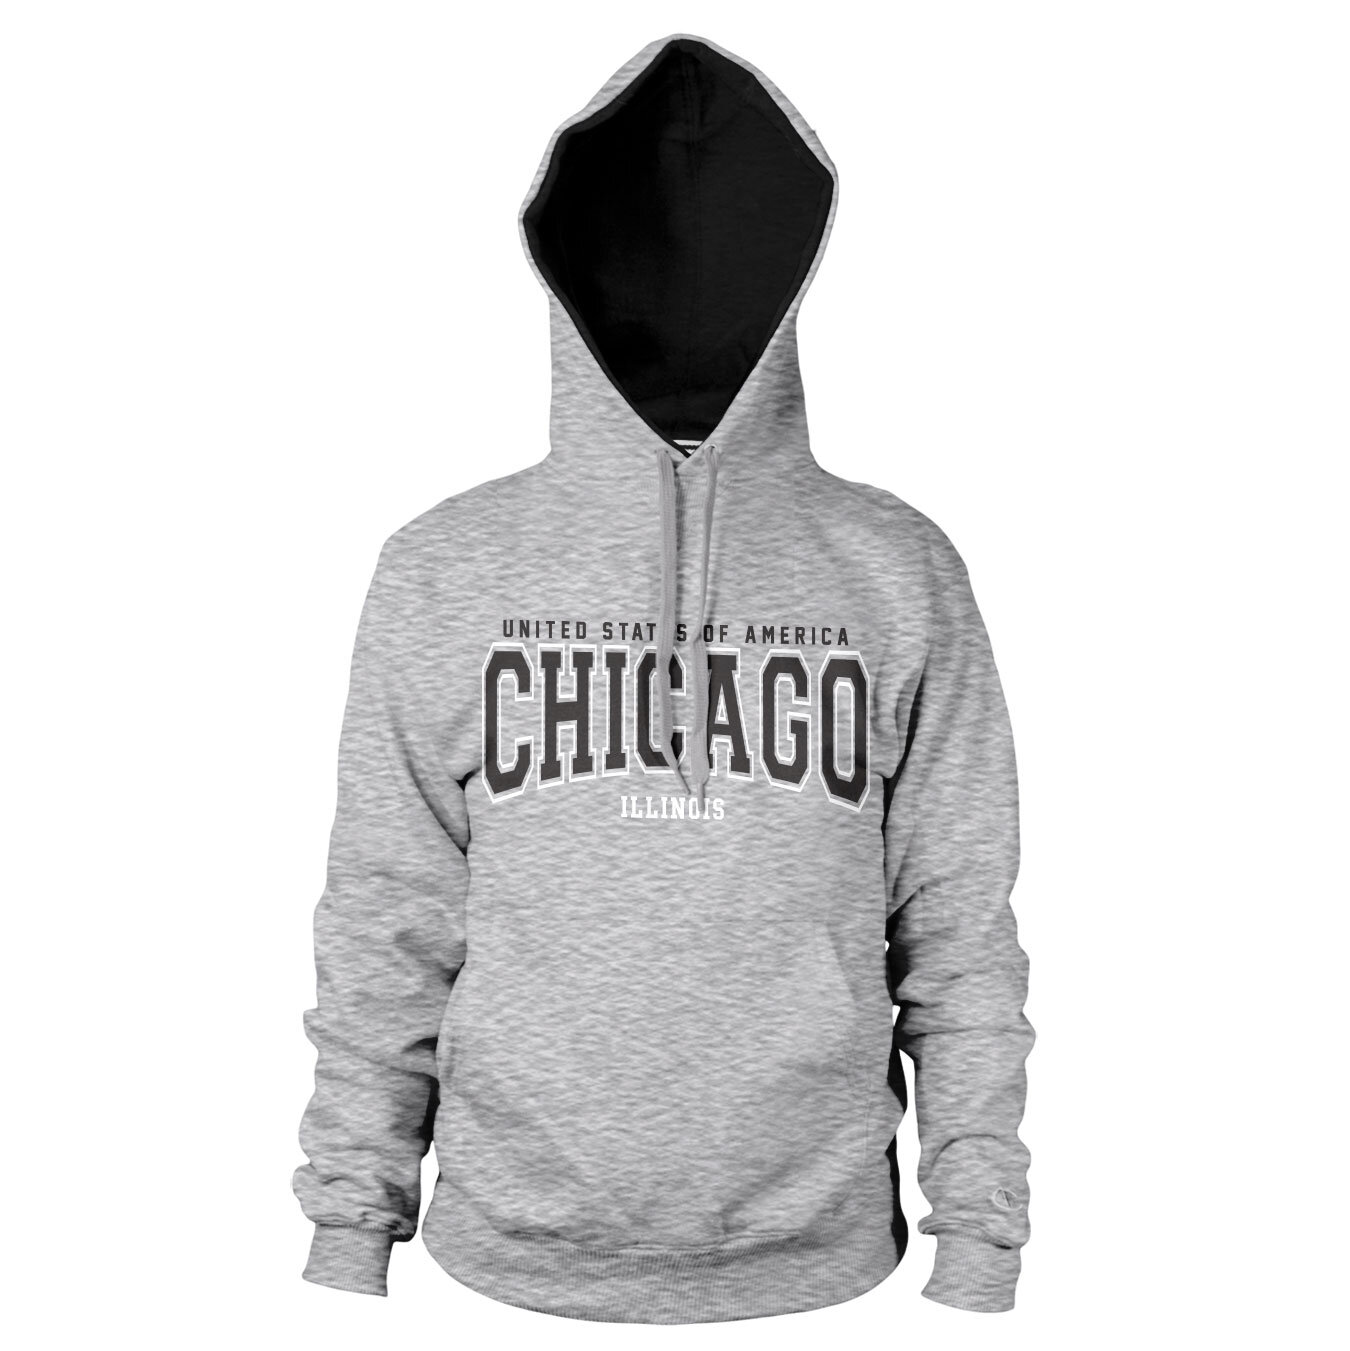 Chicago - Illinois Hoodie